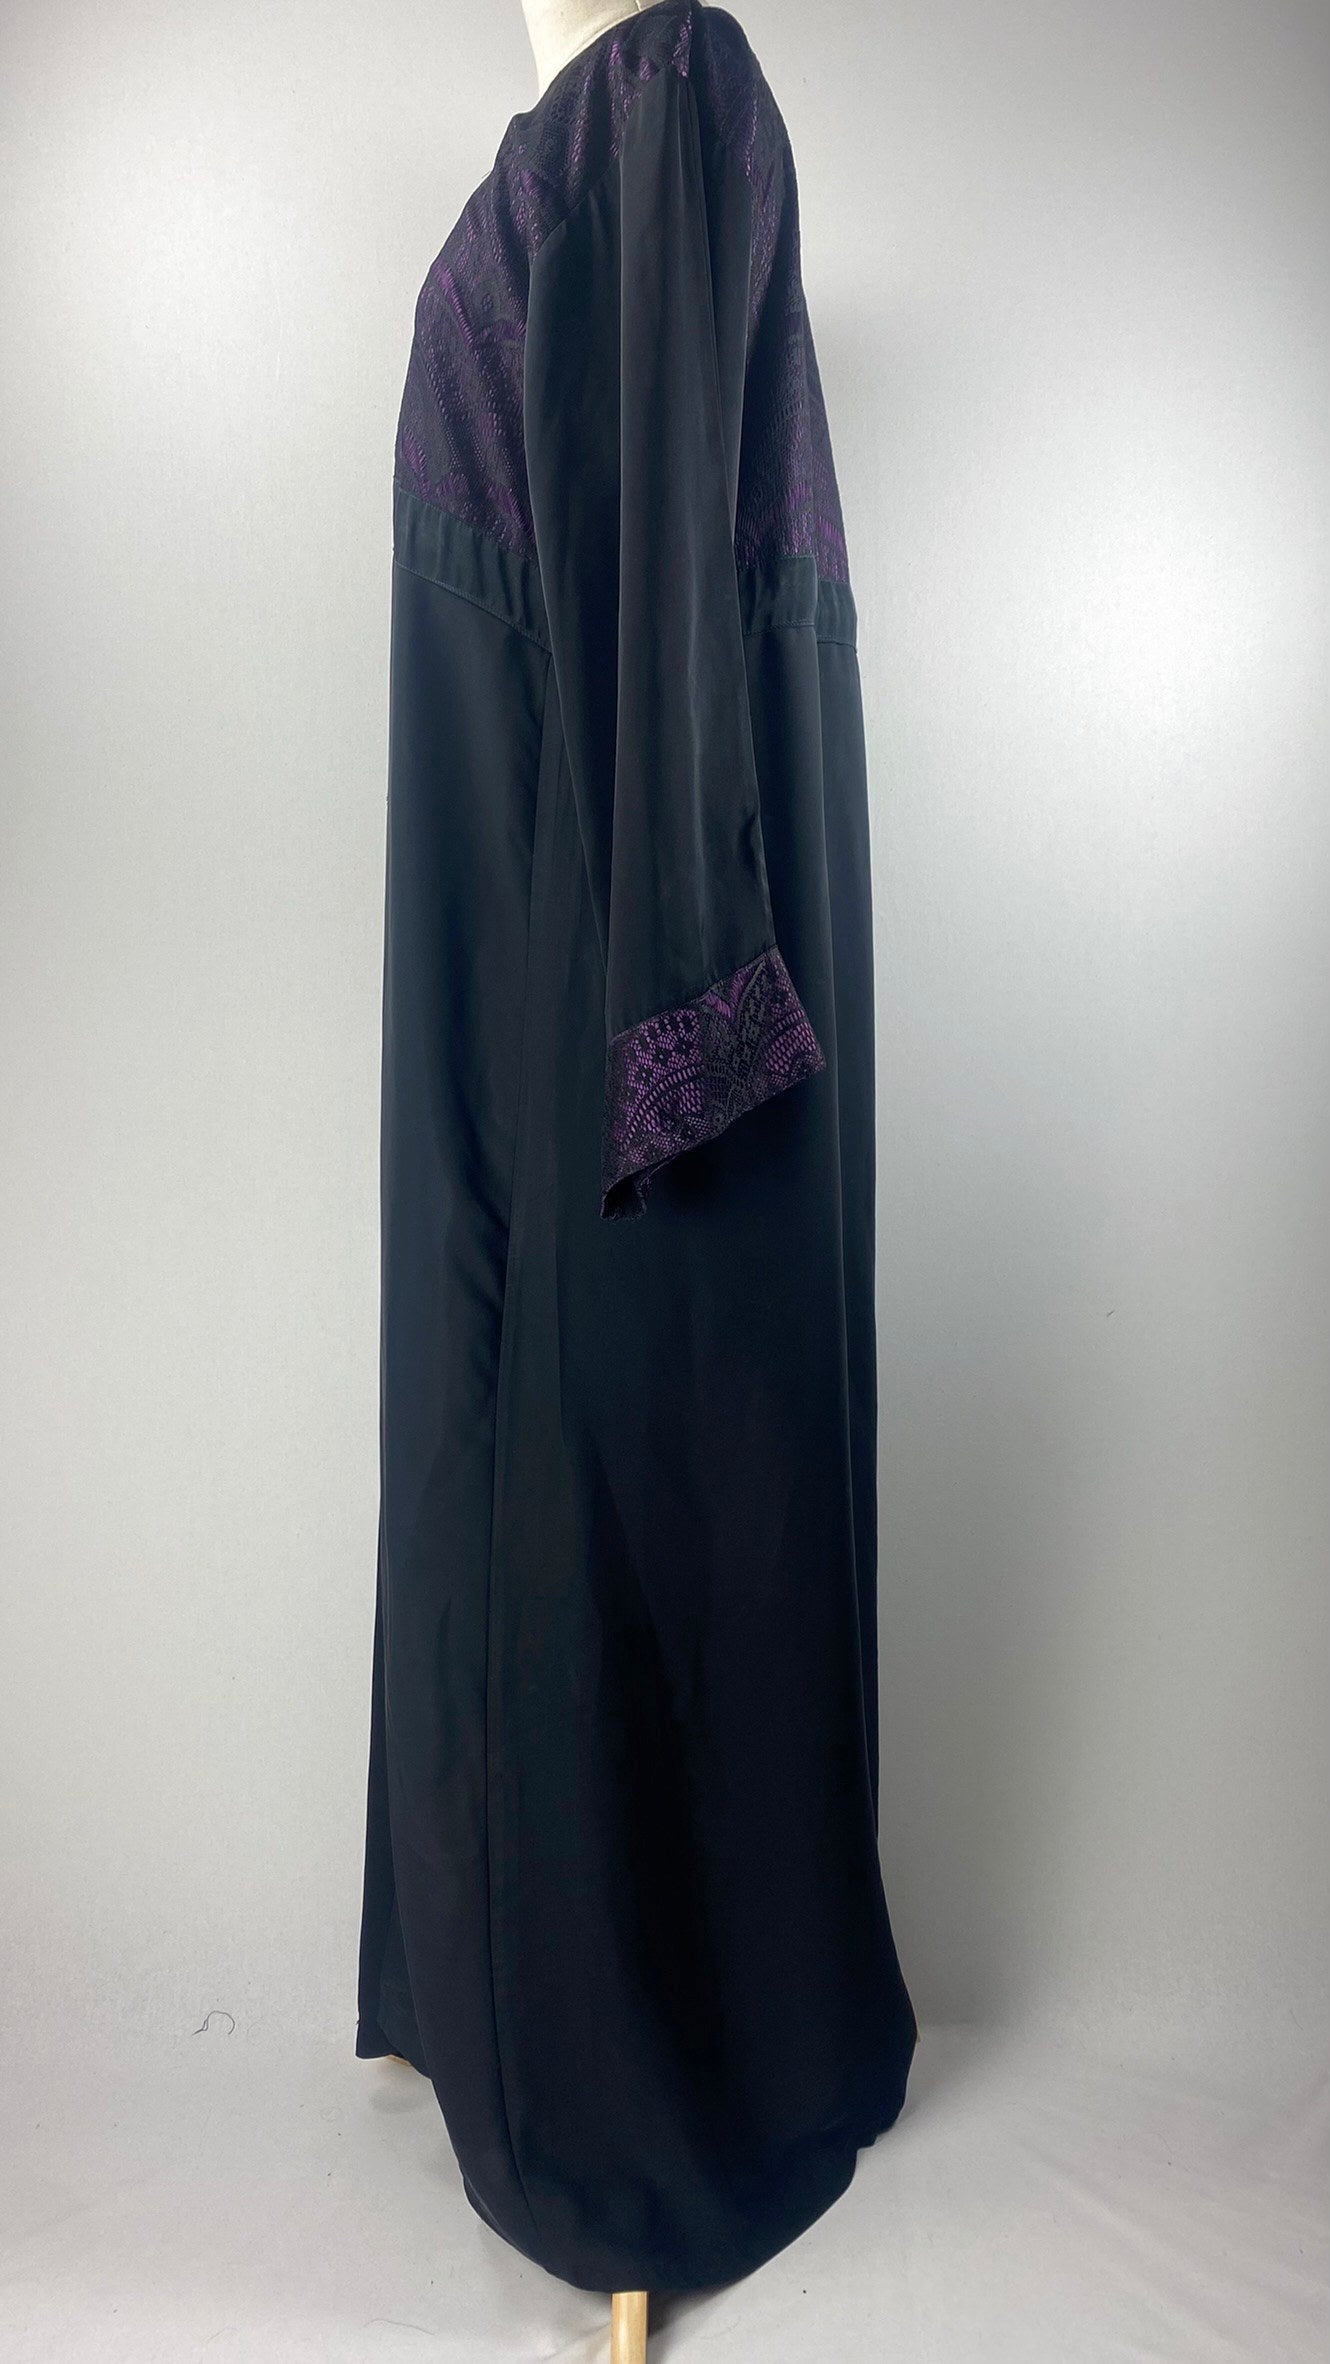 Long Sleeve Closed Abaya with Lace, Black/Purple